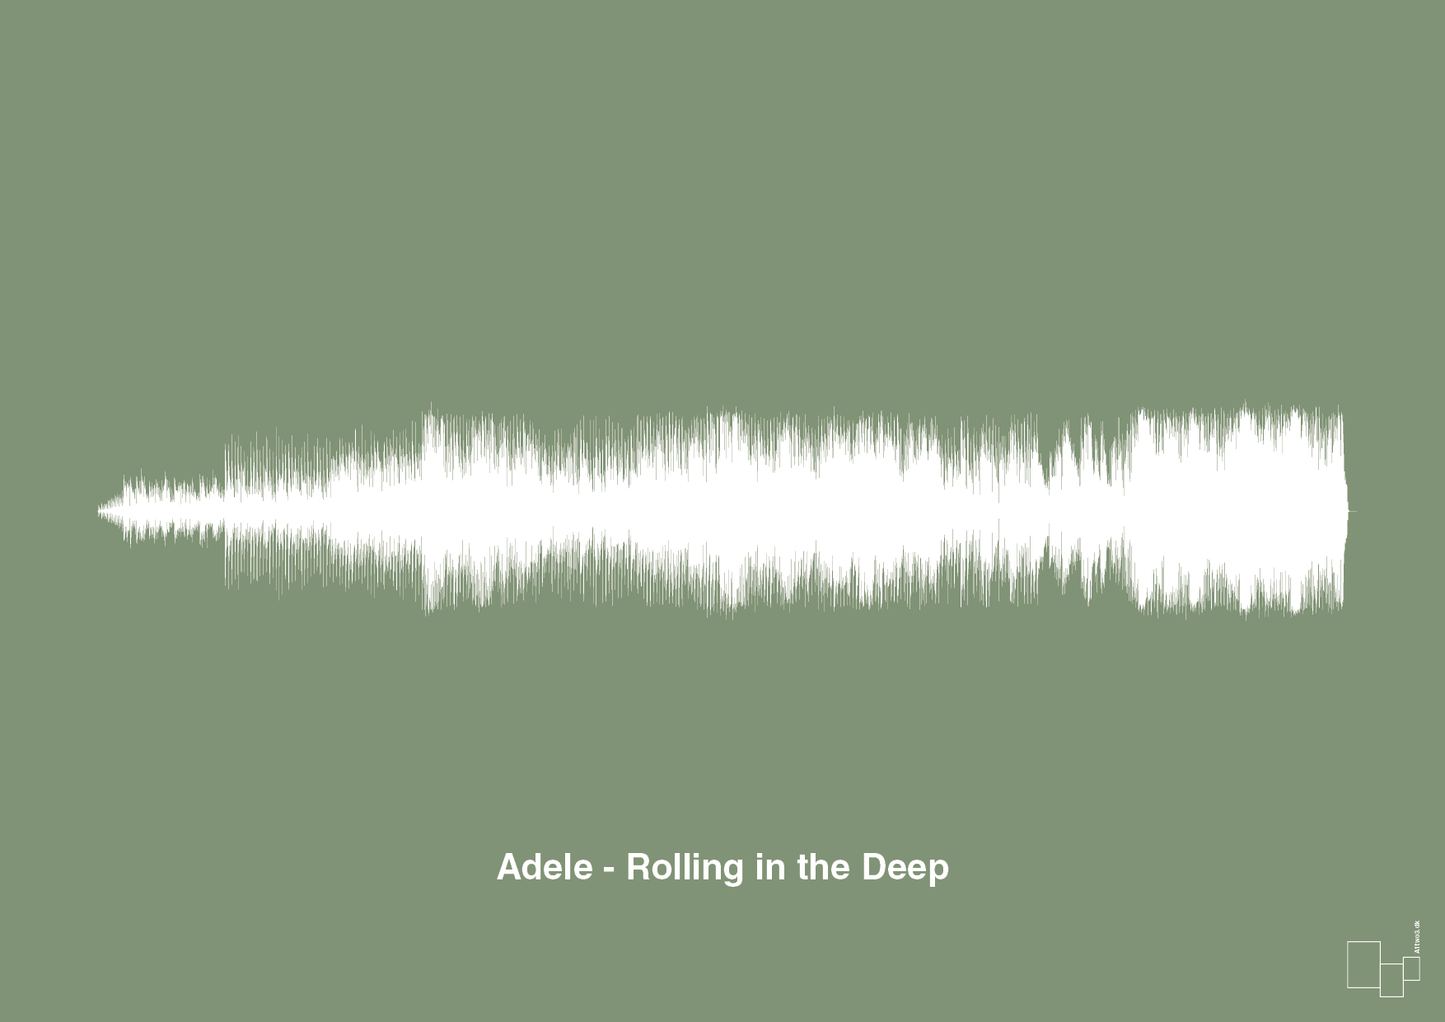 adele - rolling in the deep - Plakat med Musik i Jade